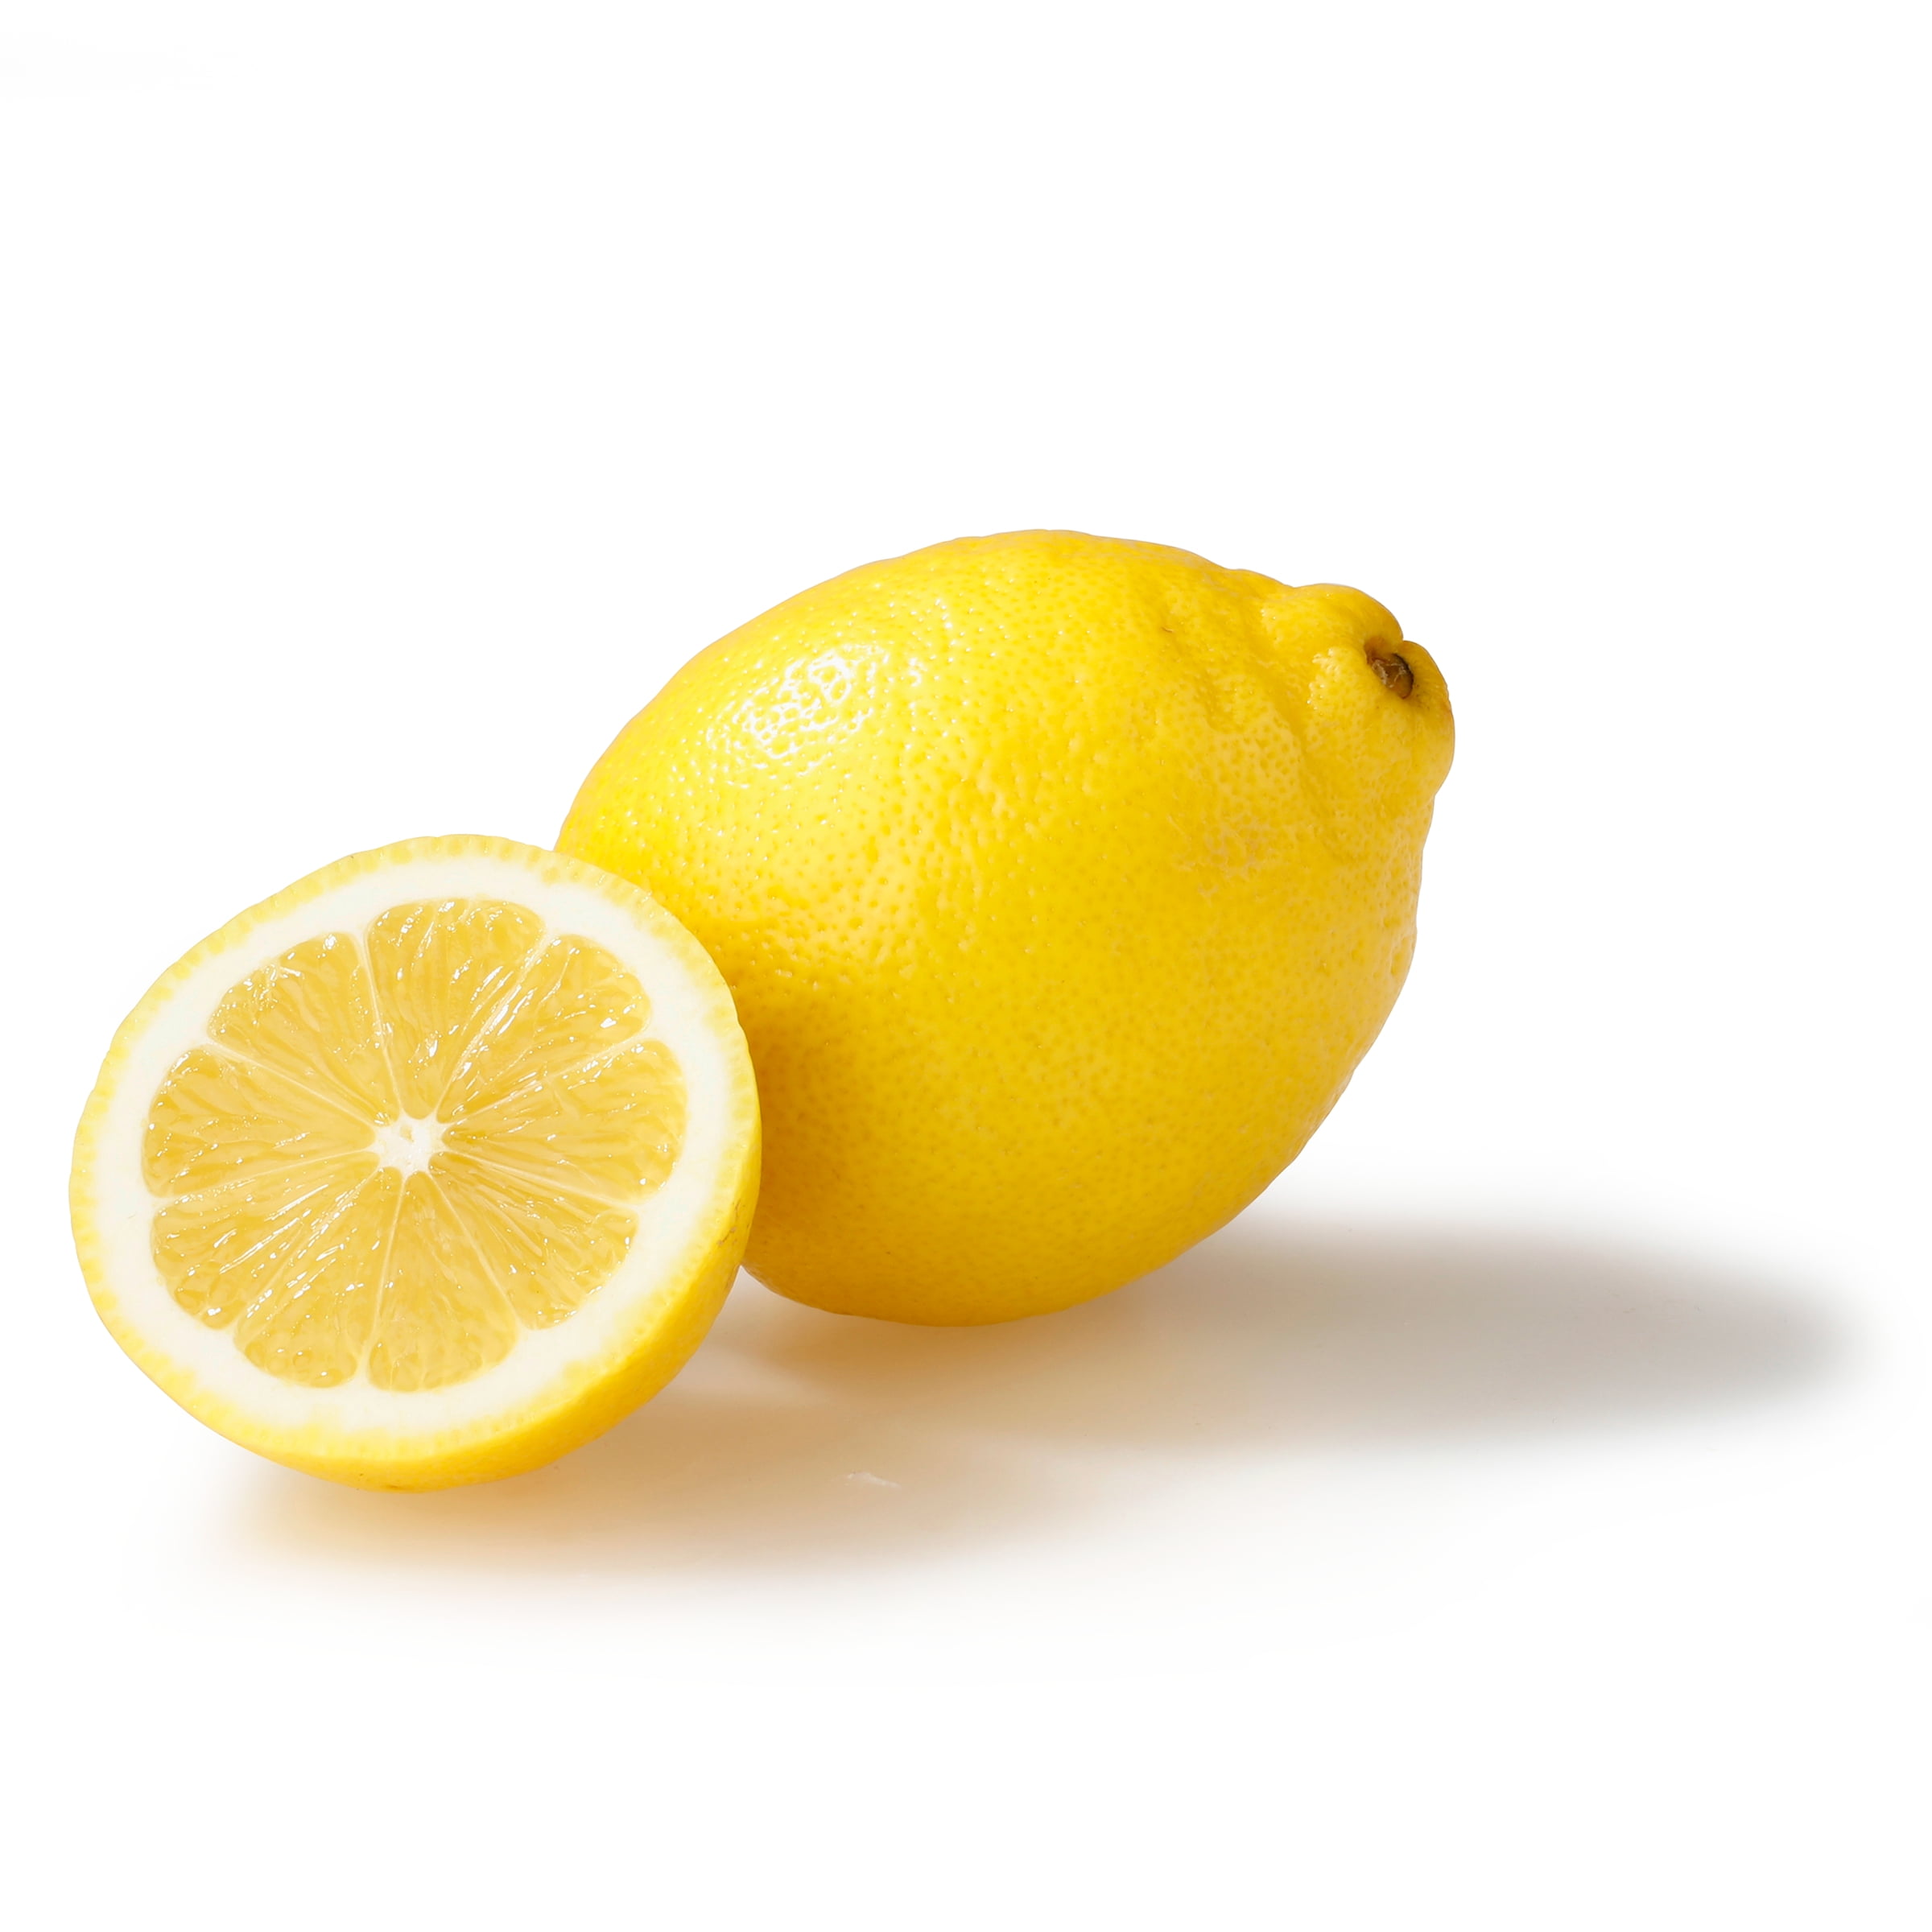 Fresh Lemons, 2 lb Bag